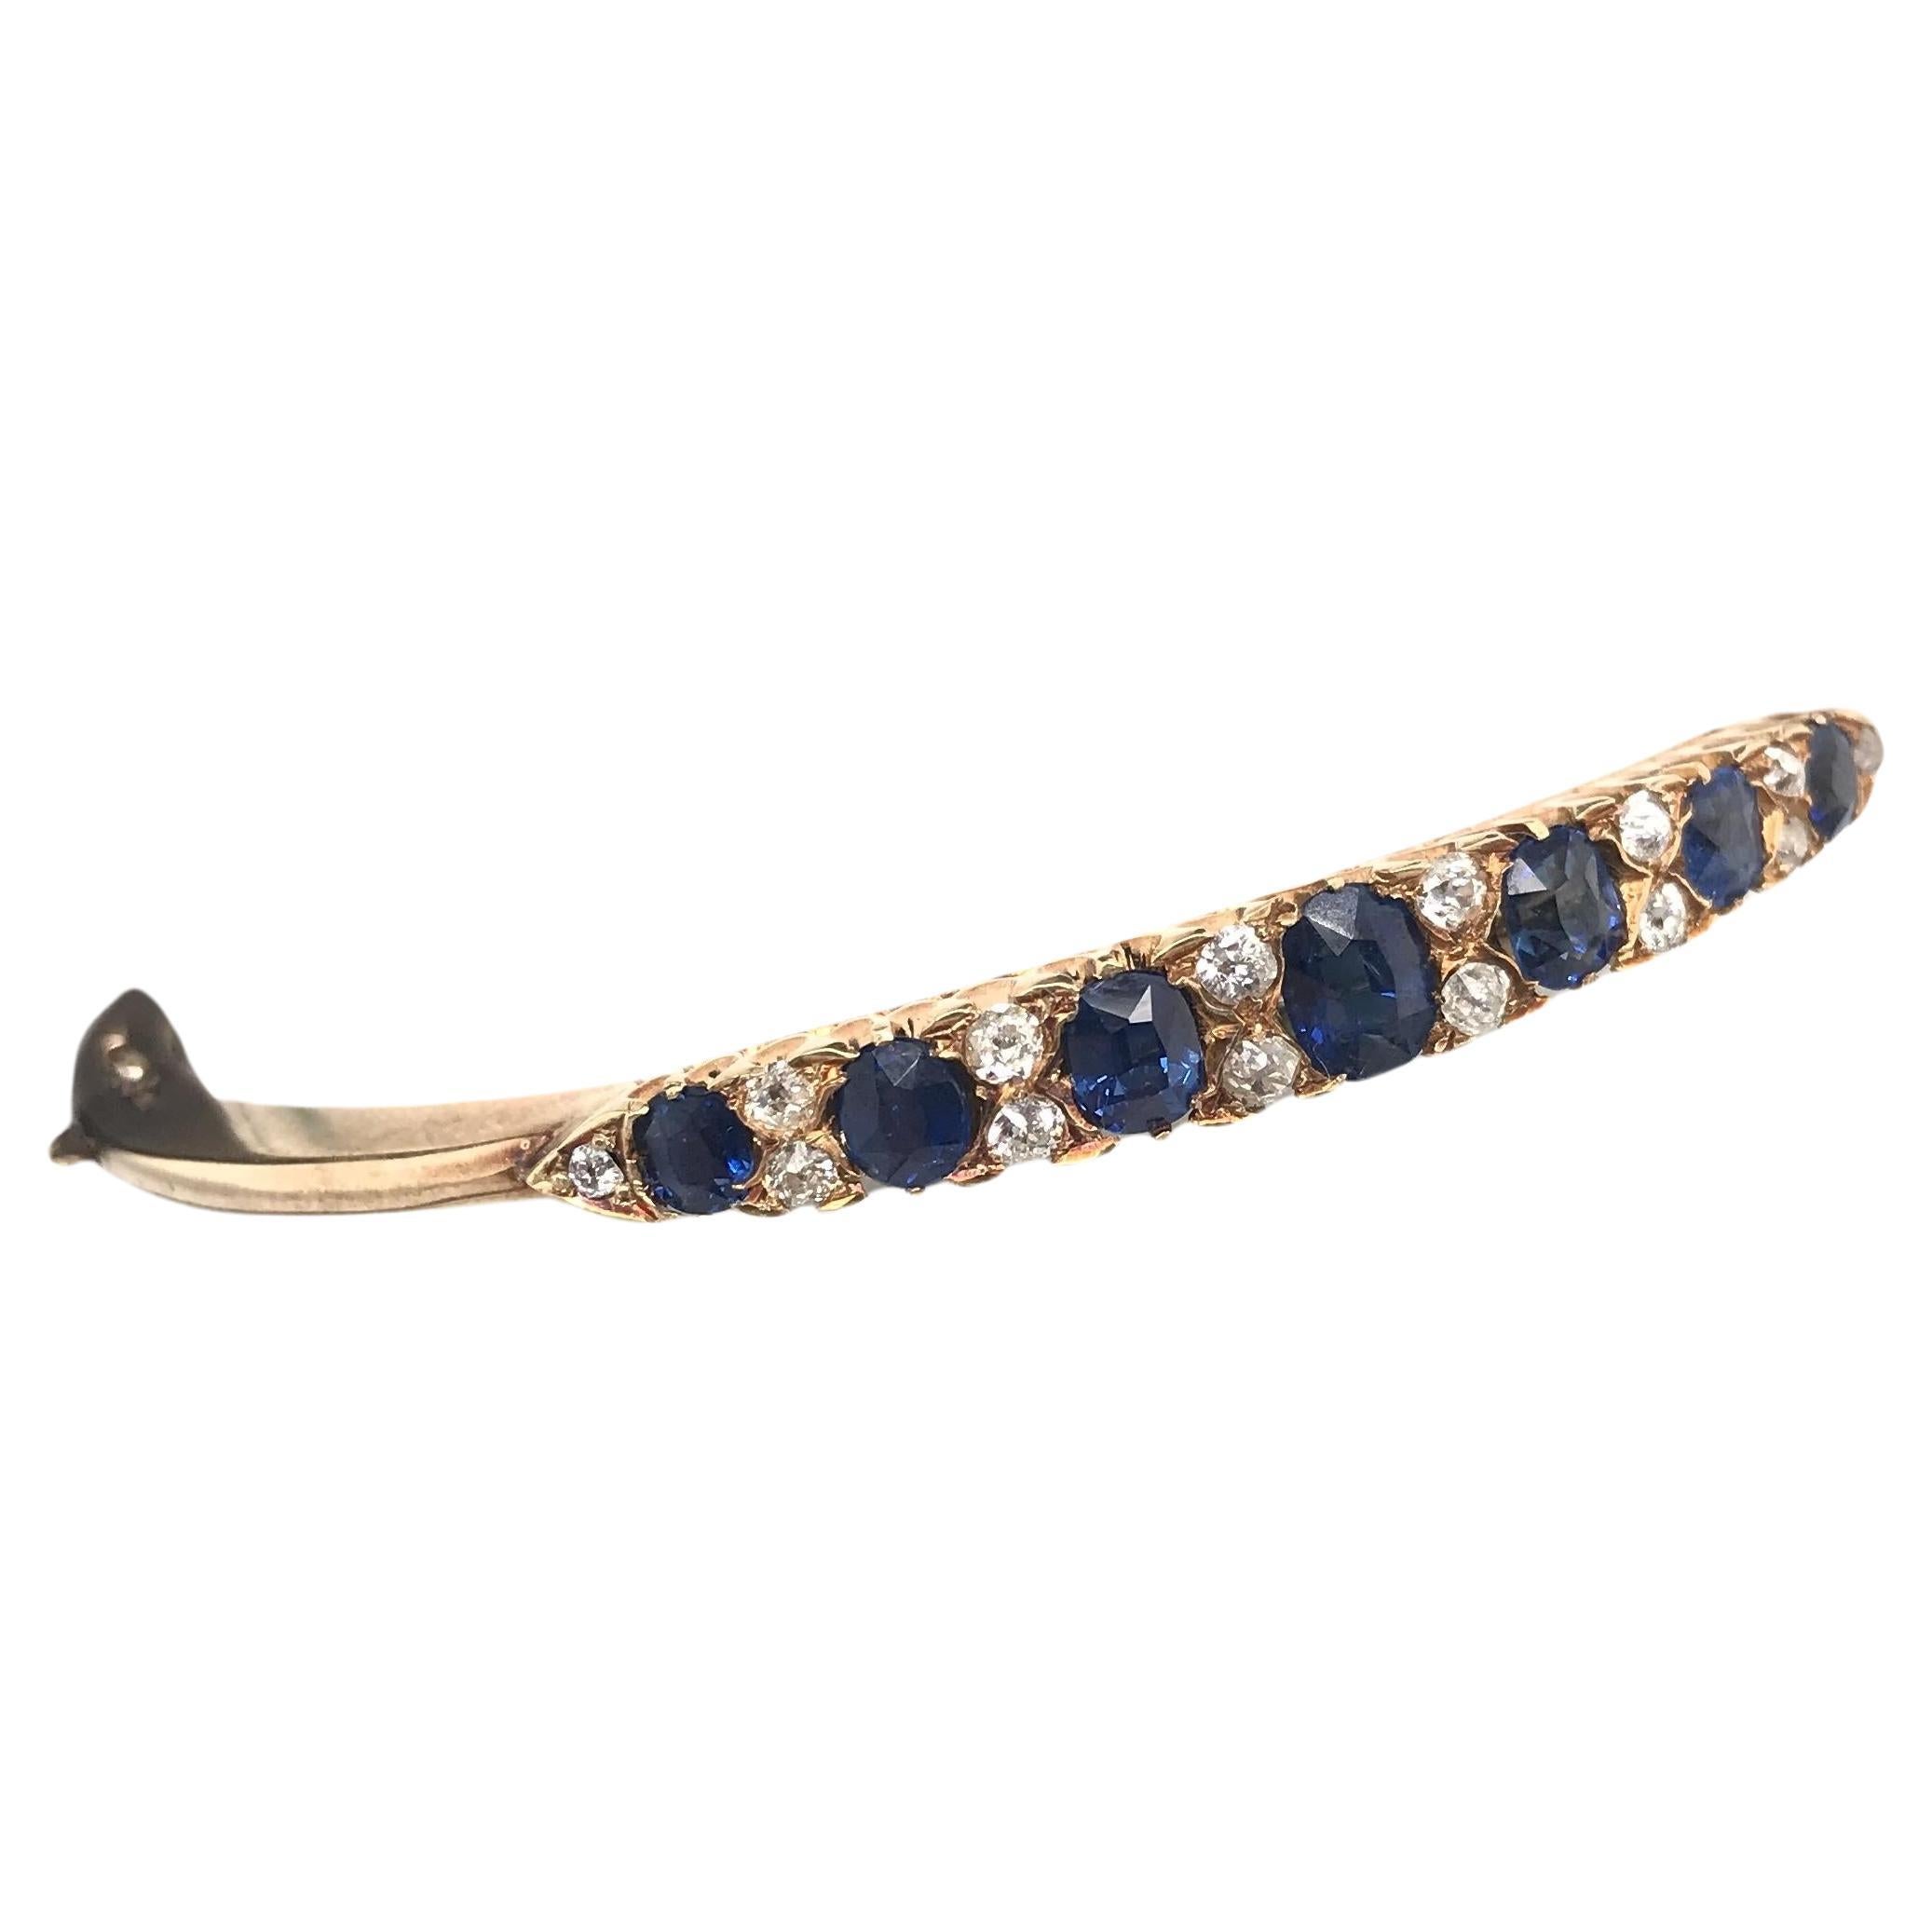 Antique Victorian Sapphire and Diamond Bangle Bracelet